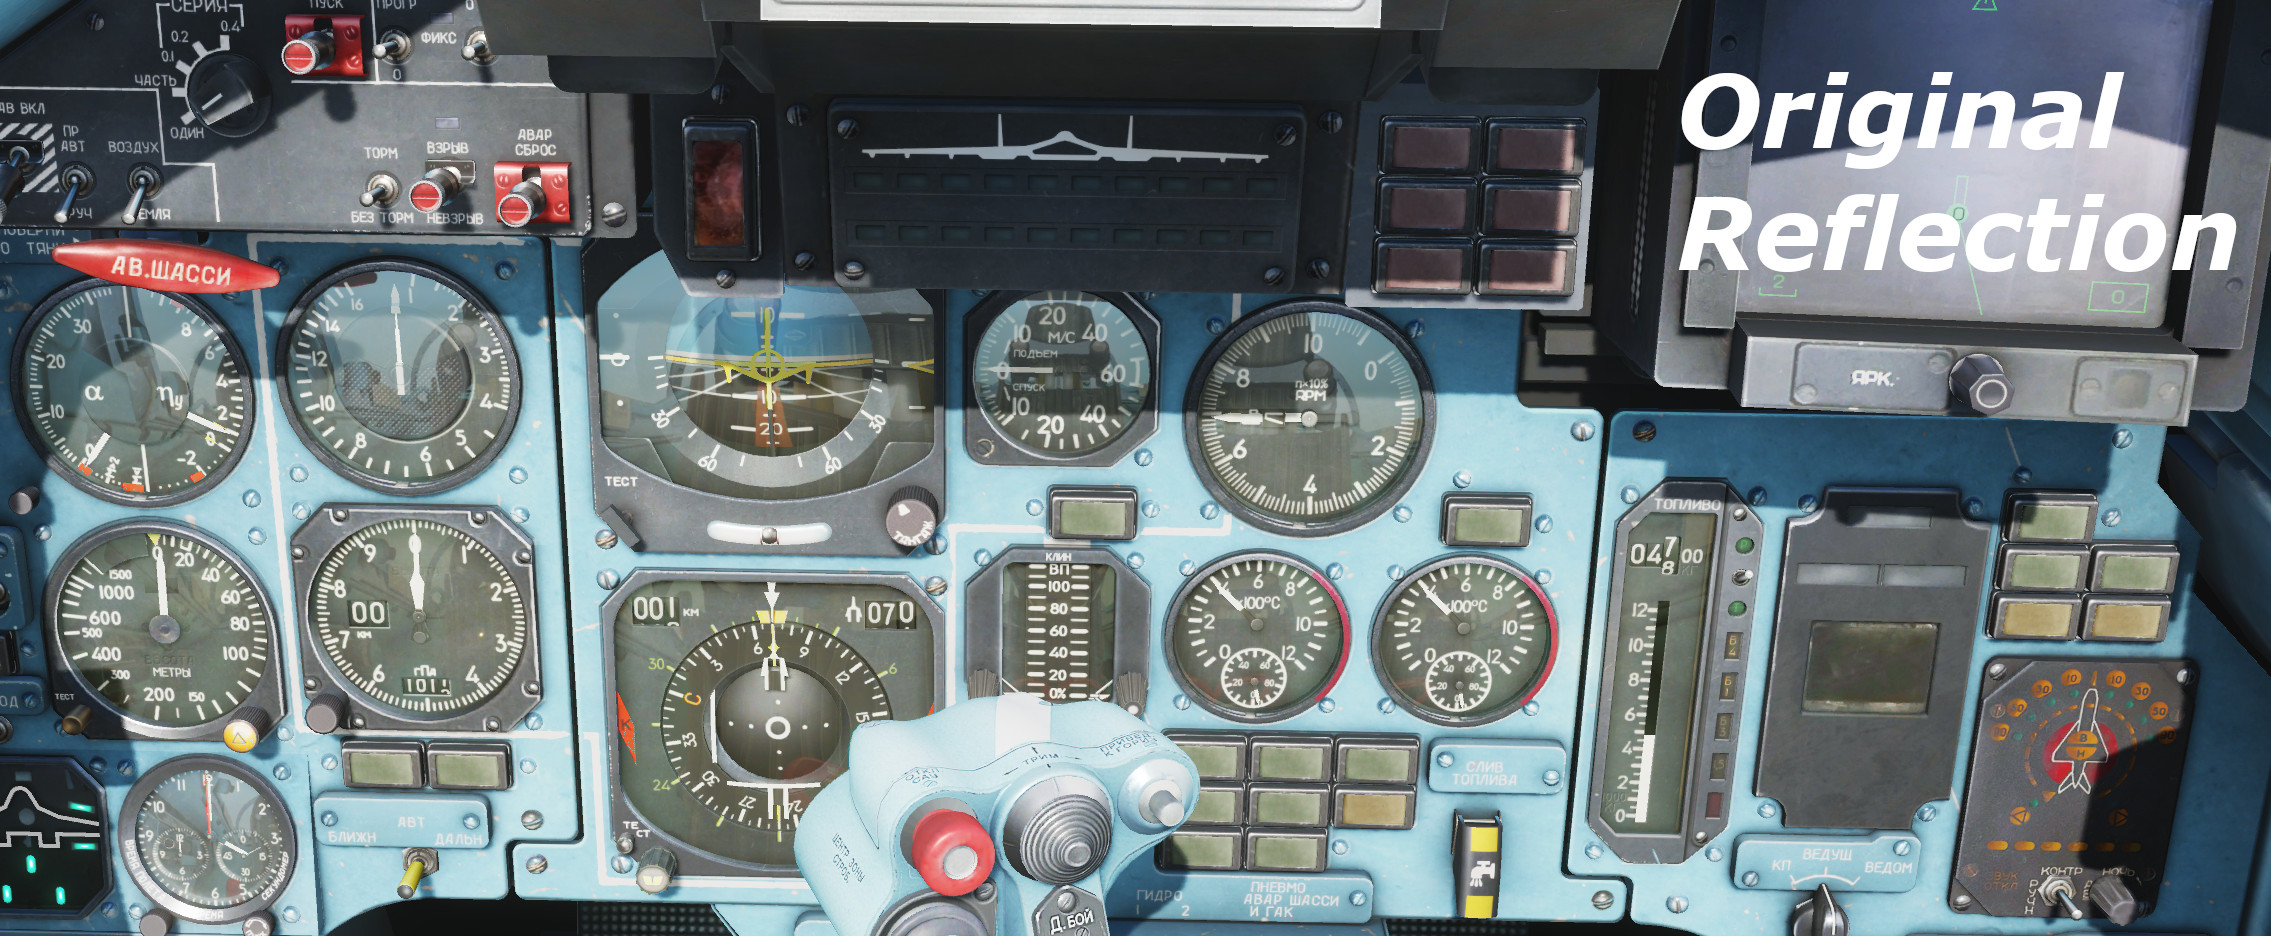 Su33 Cockpit Instrument Reflection Mod